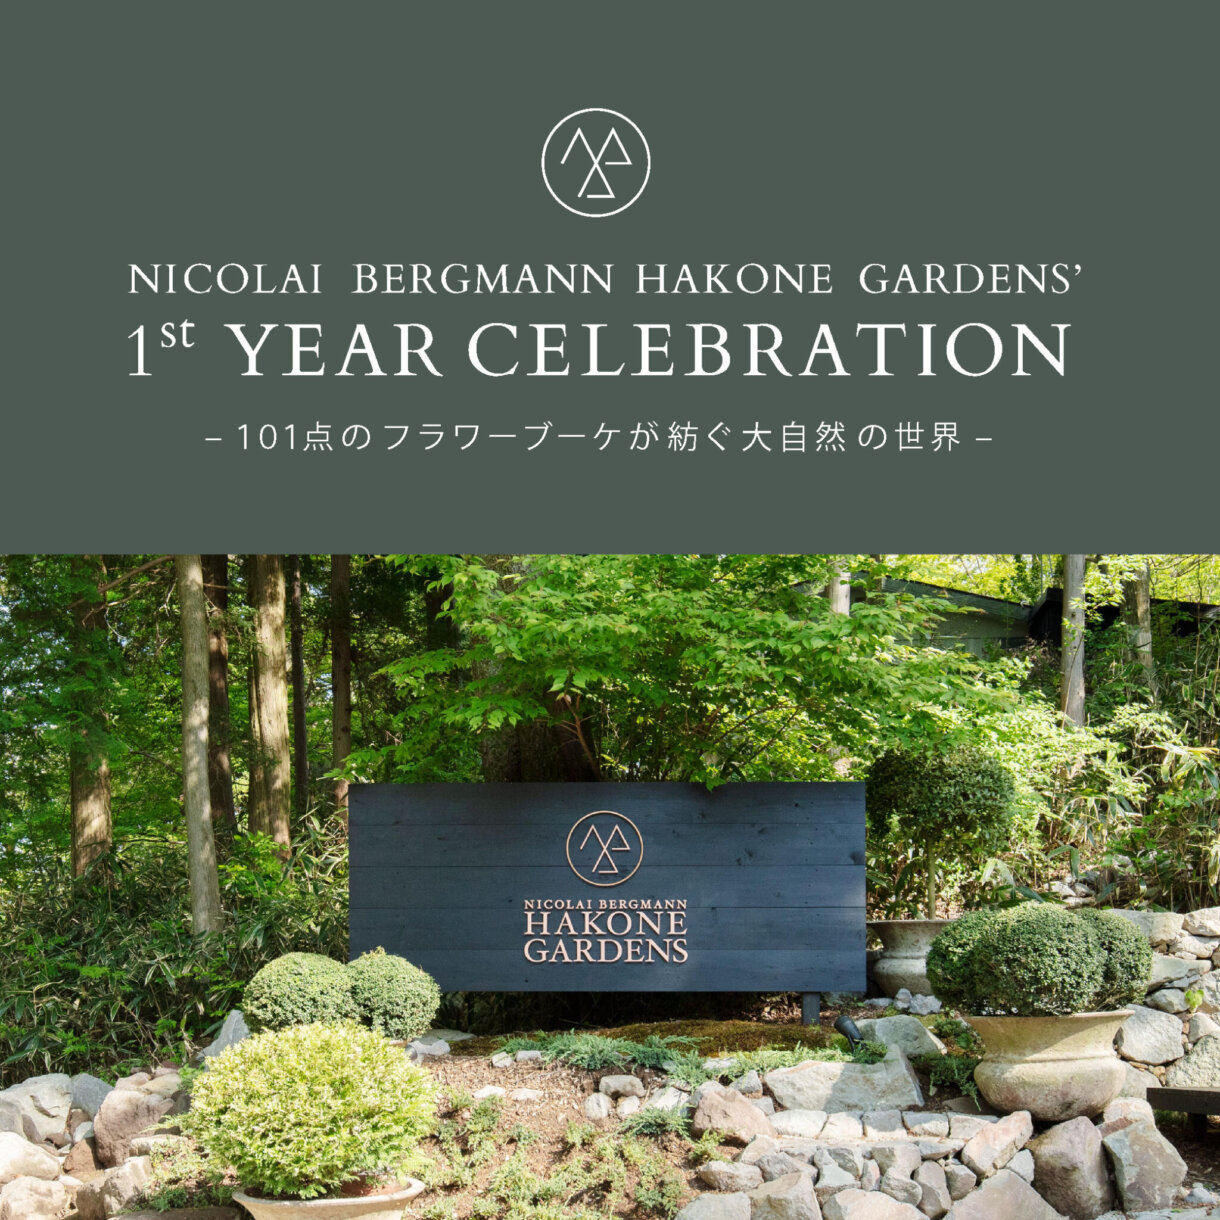 NICOLAI BERGMANN HAKONE GARDENS : Event announcement 「NICOLAI BERGMANN HAKONE GARDENS’ 1st YEAR CELEBRATION」